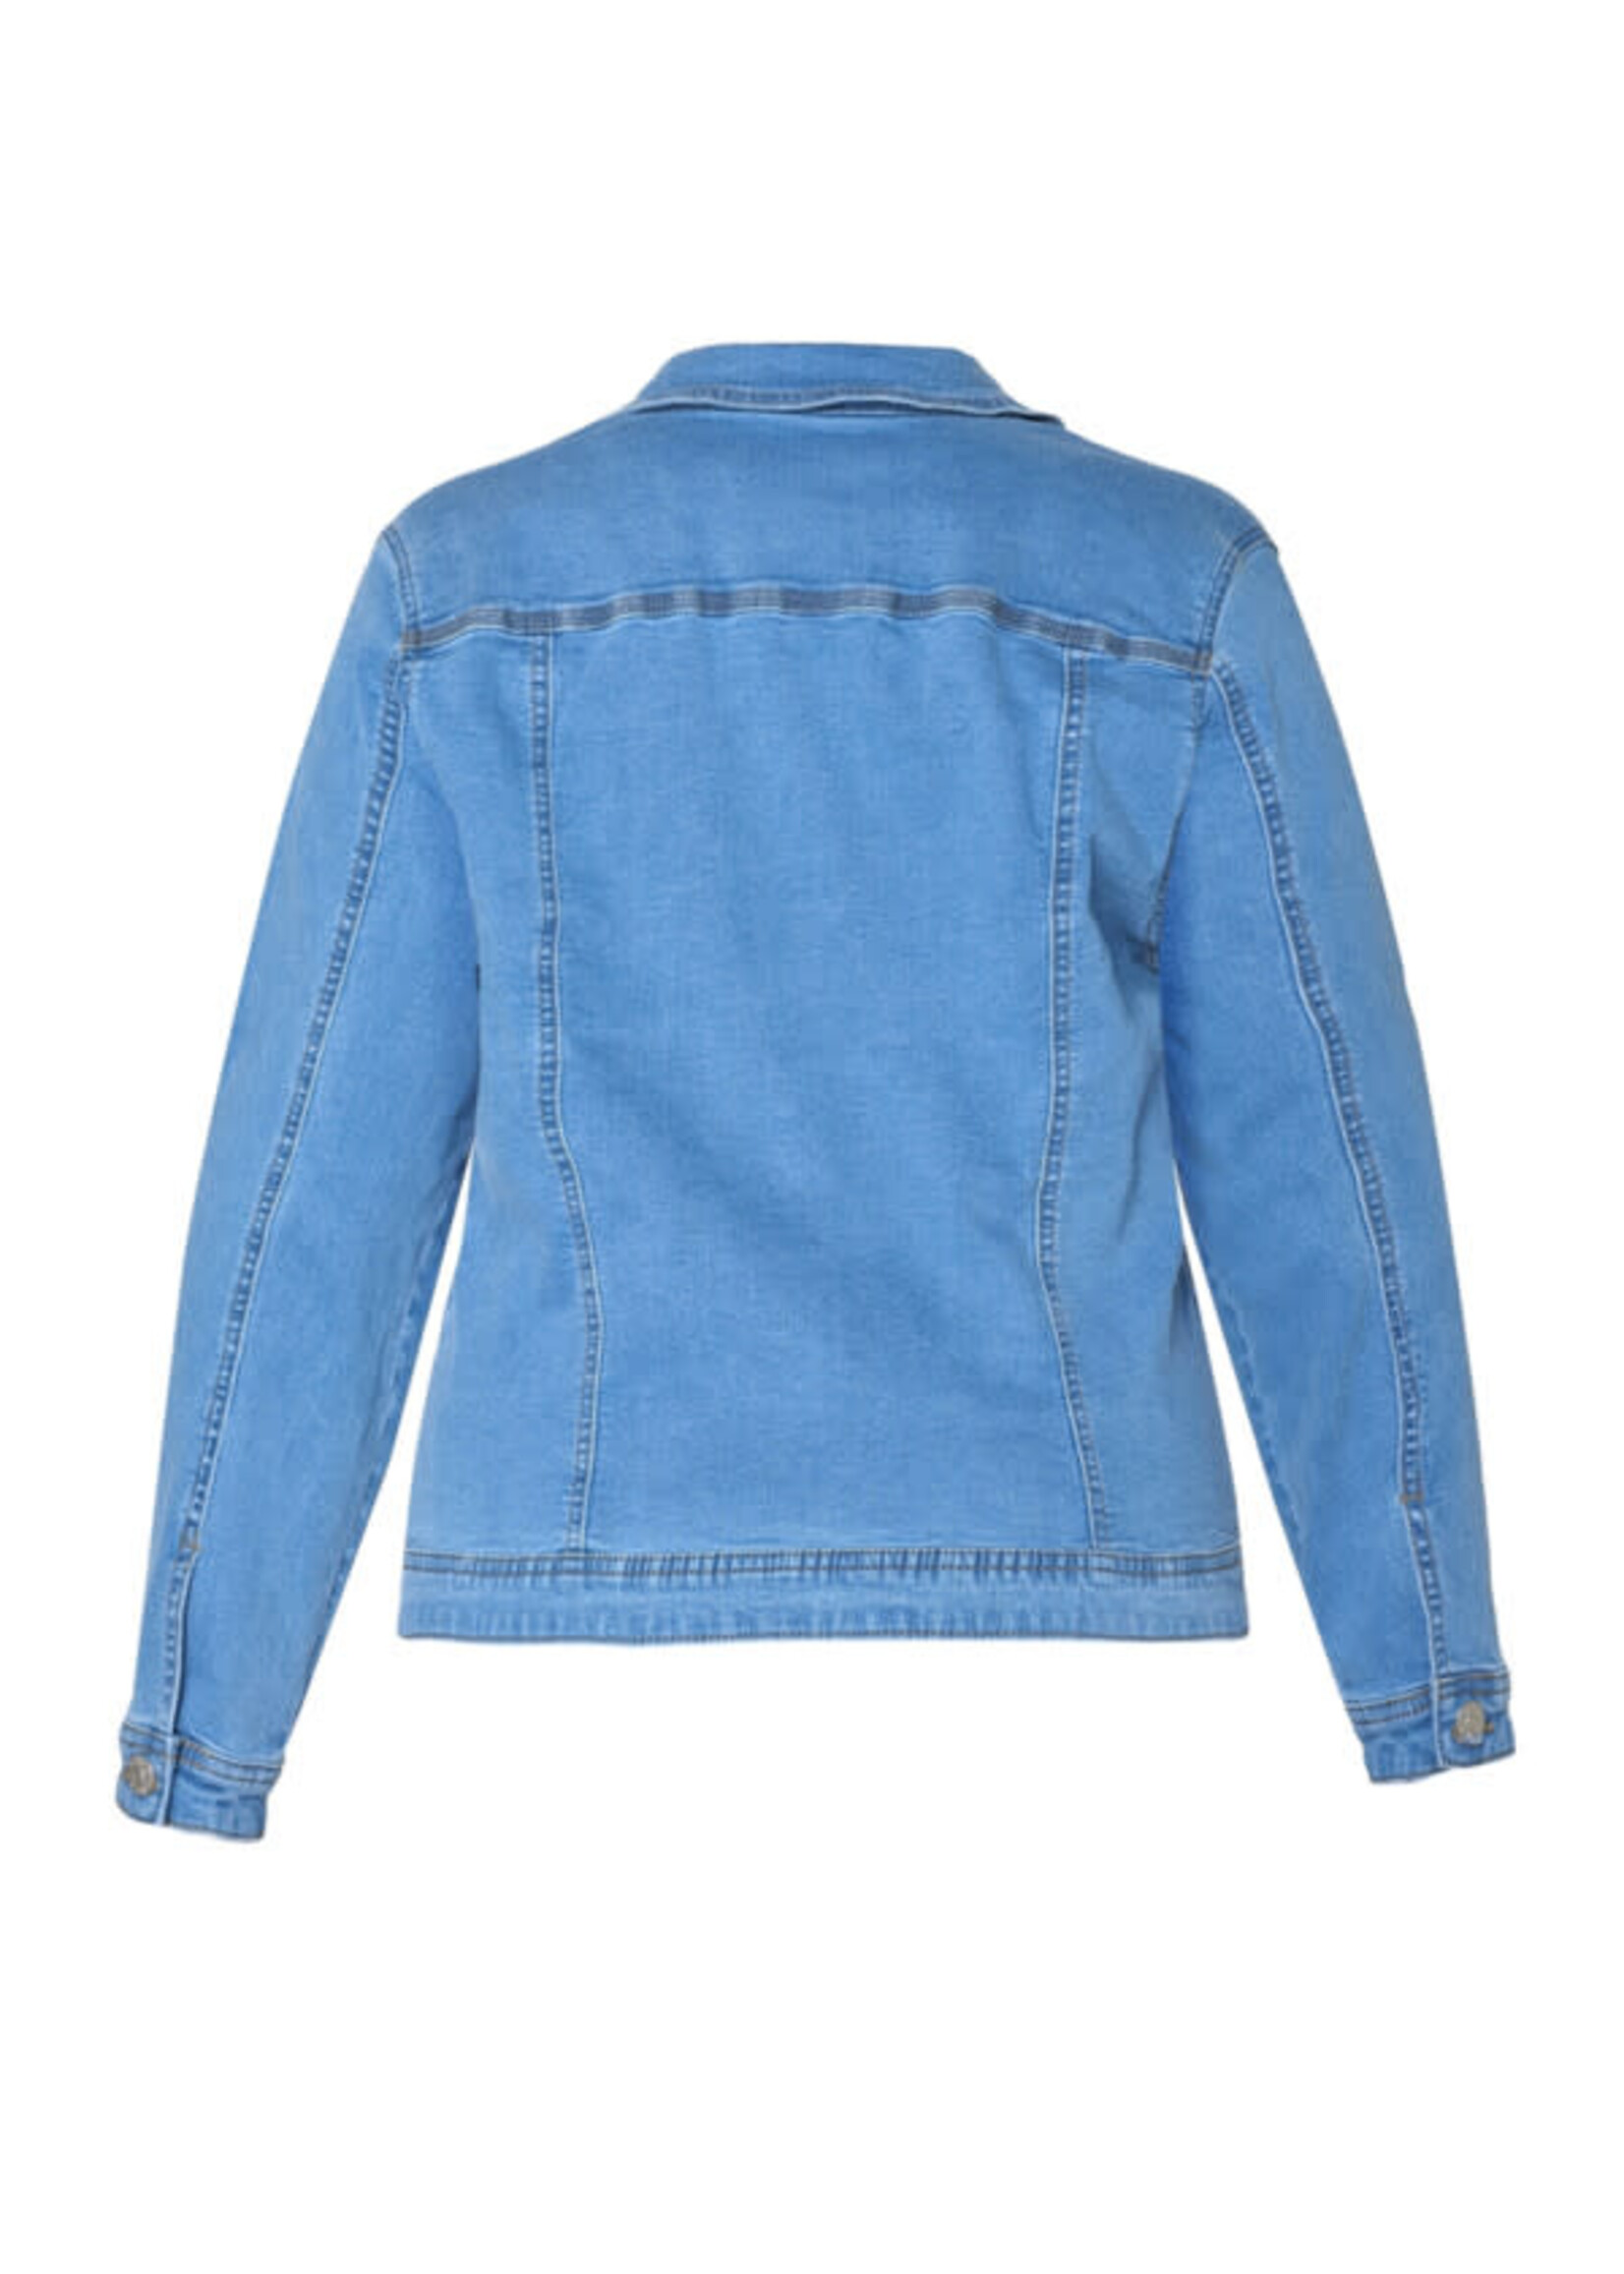 Ciso Denim jacket blue